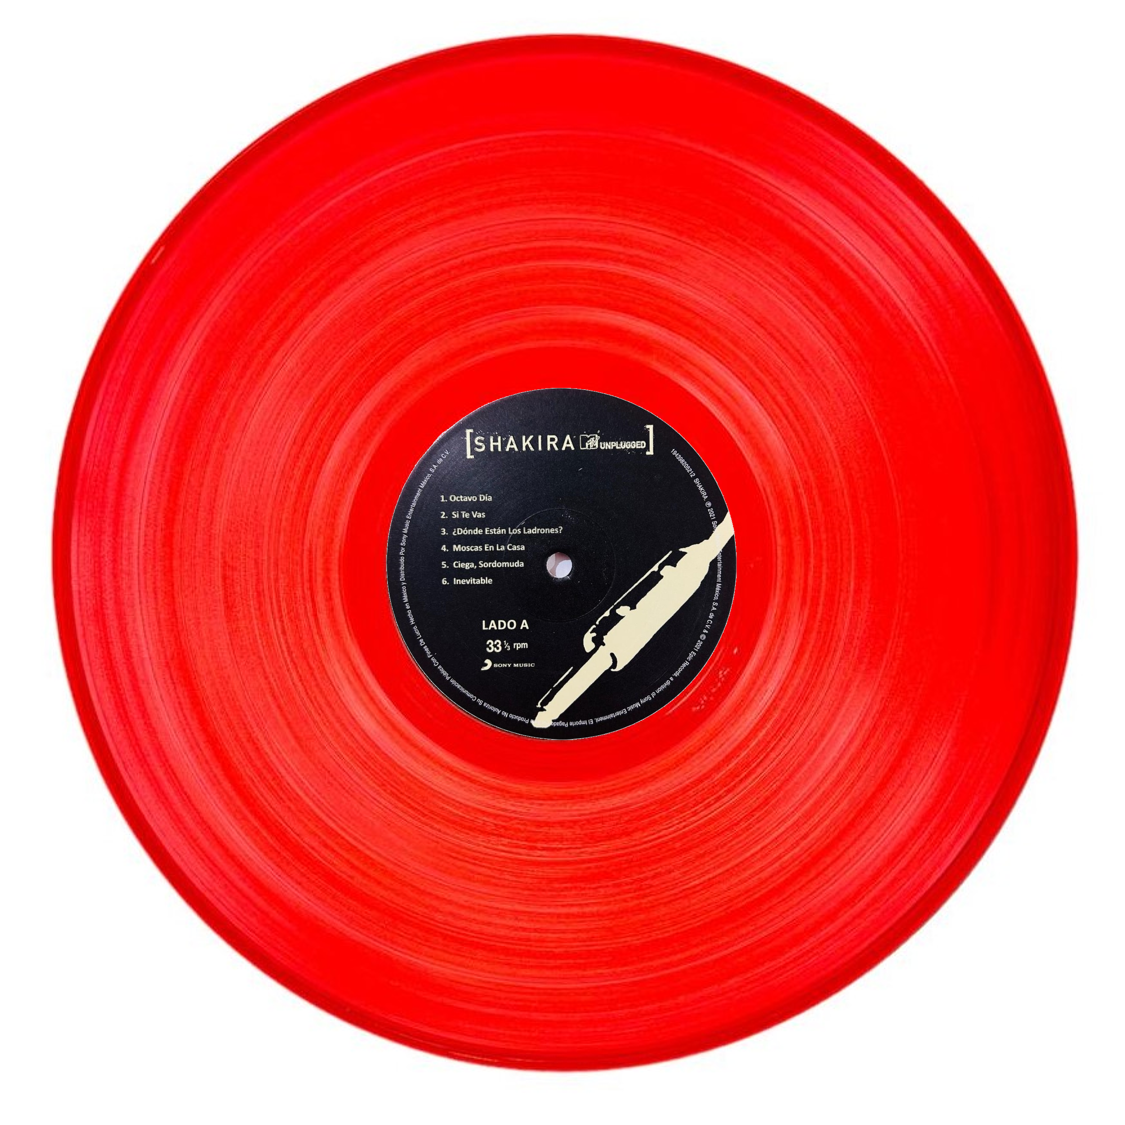 Shakira Mtv Unplugged Red Rojo Lp Vinyl